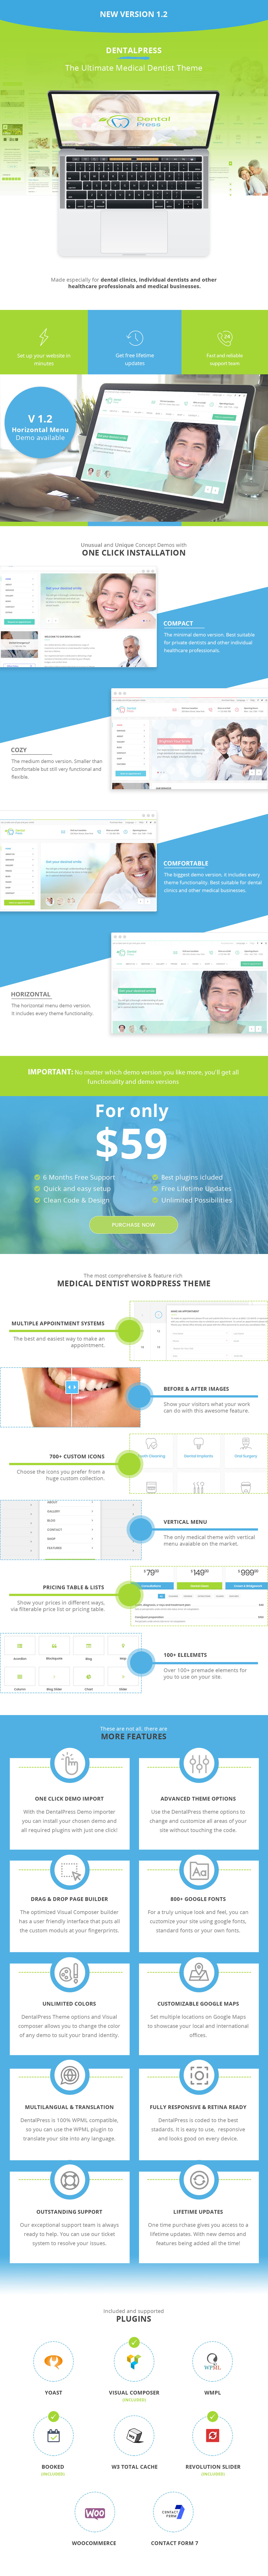 DentalPress - Ultimate Medical Dentist Theme - 1